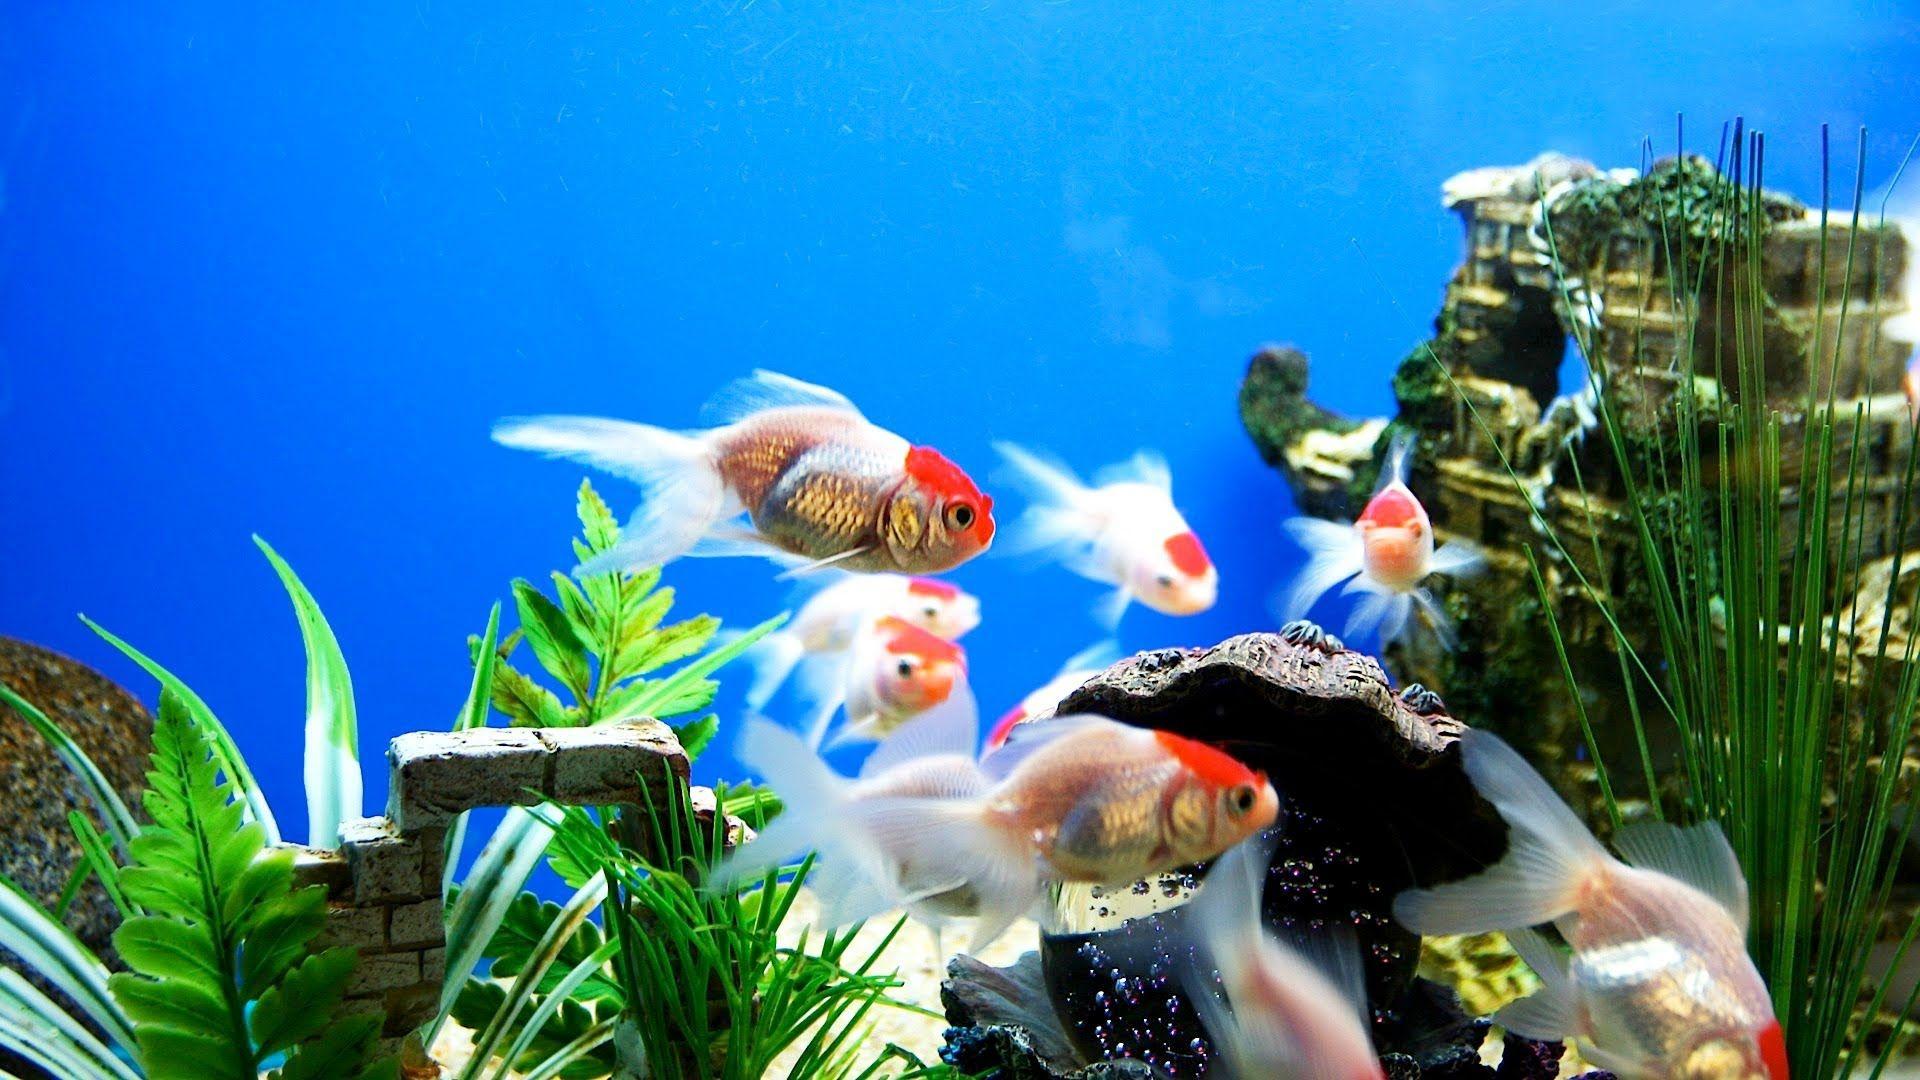 Golden fish aquarium background wallpaper